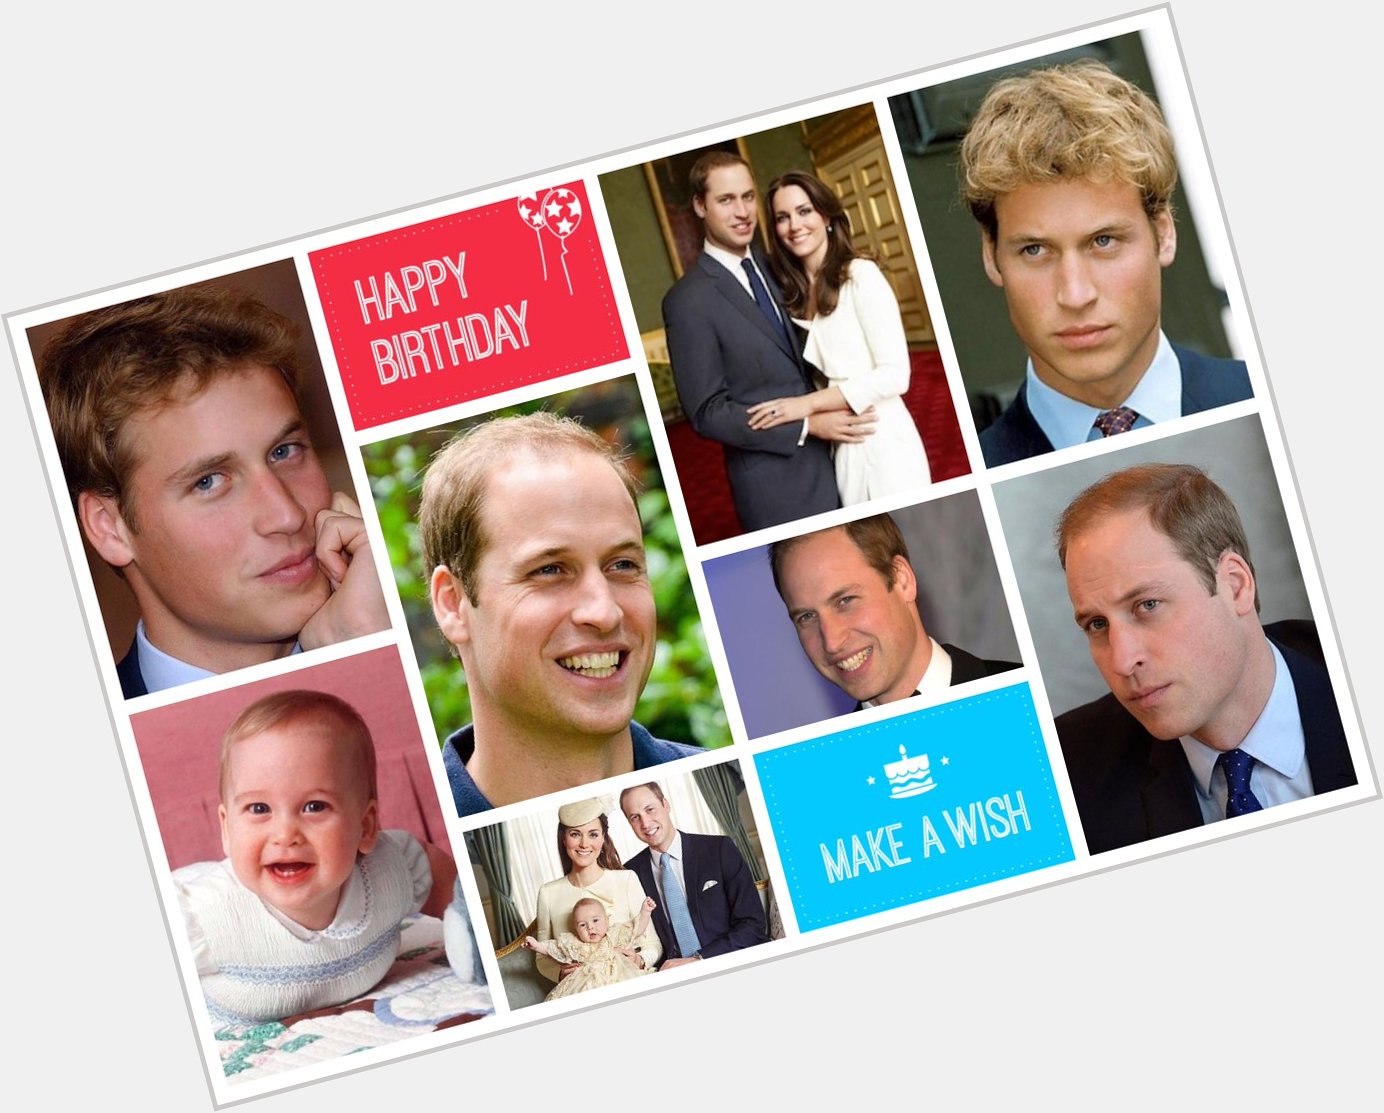 Happy Birthday to the Duke of Cambridge, HRH Prince William! Help us wish him the very best birthday today!! 